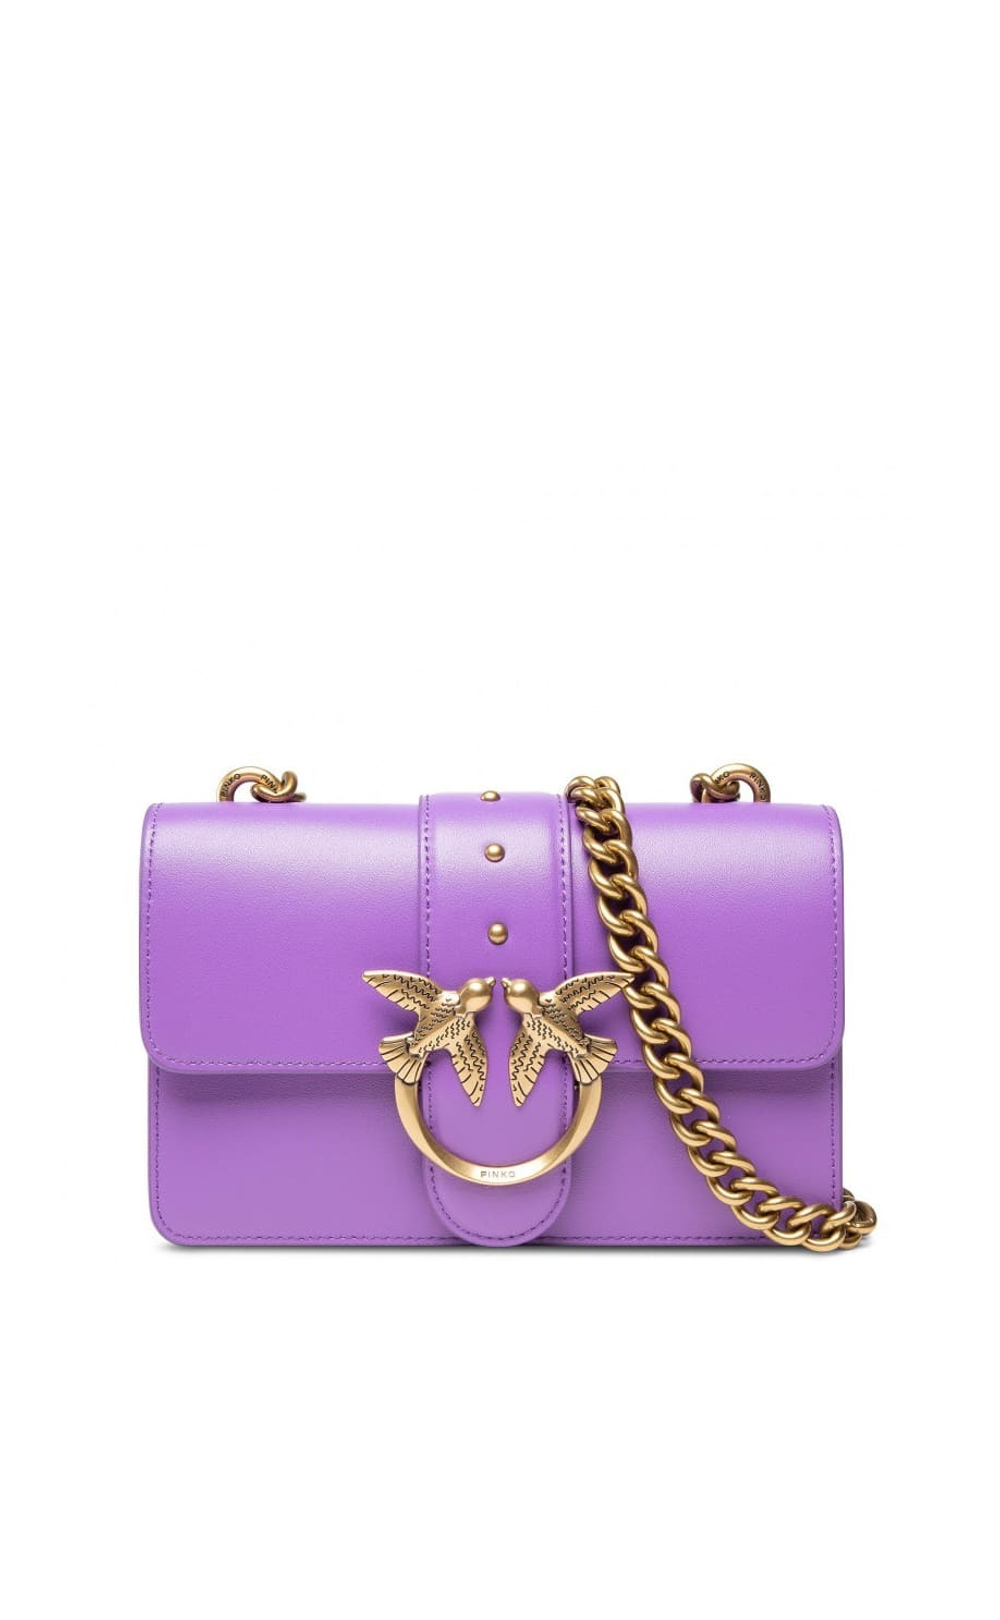 MINI LOVE BAG ICON SIMPLY – purple